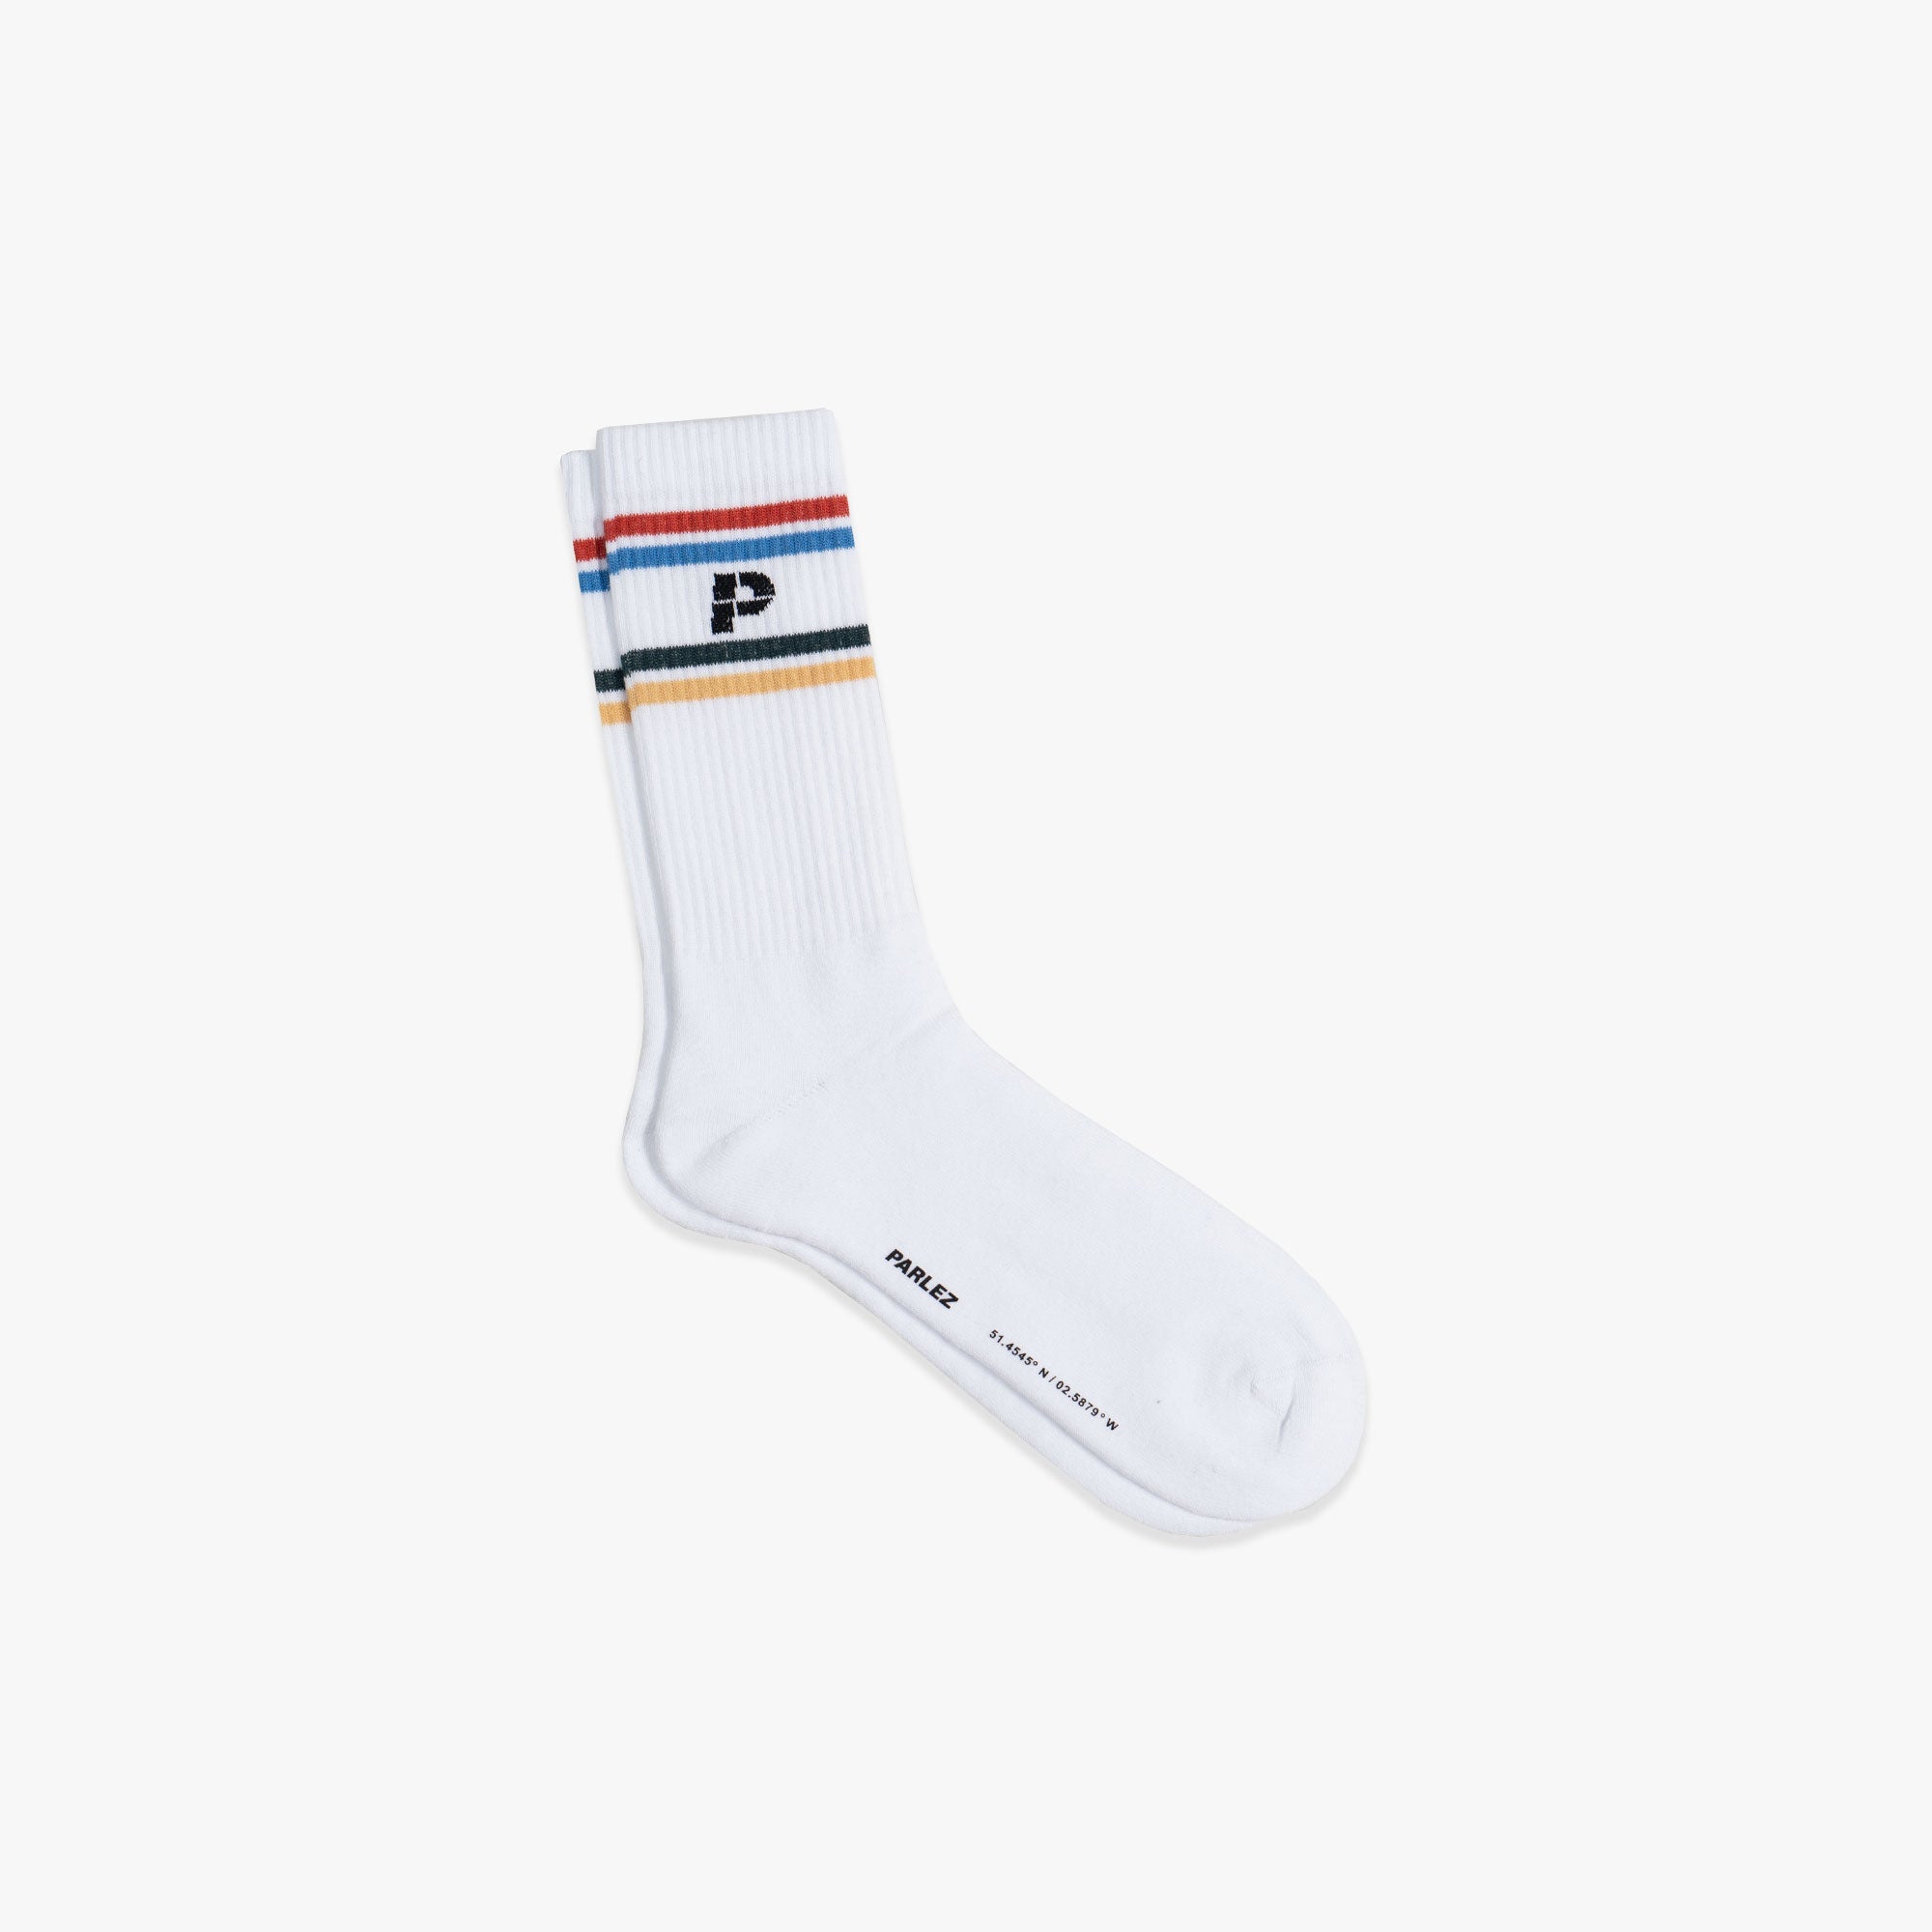 Parlez Bane Socks - White / Mixed